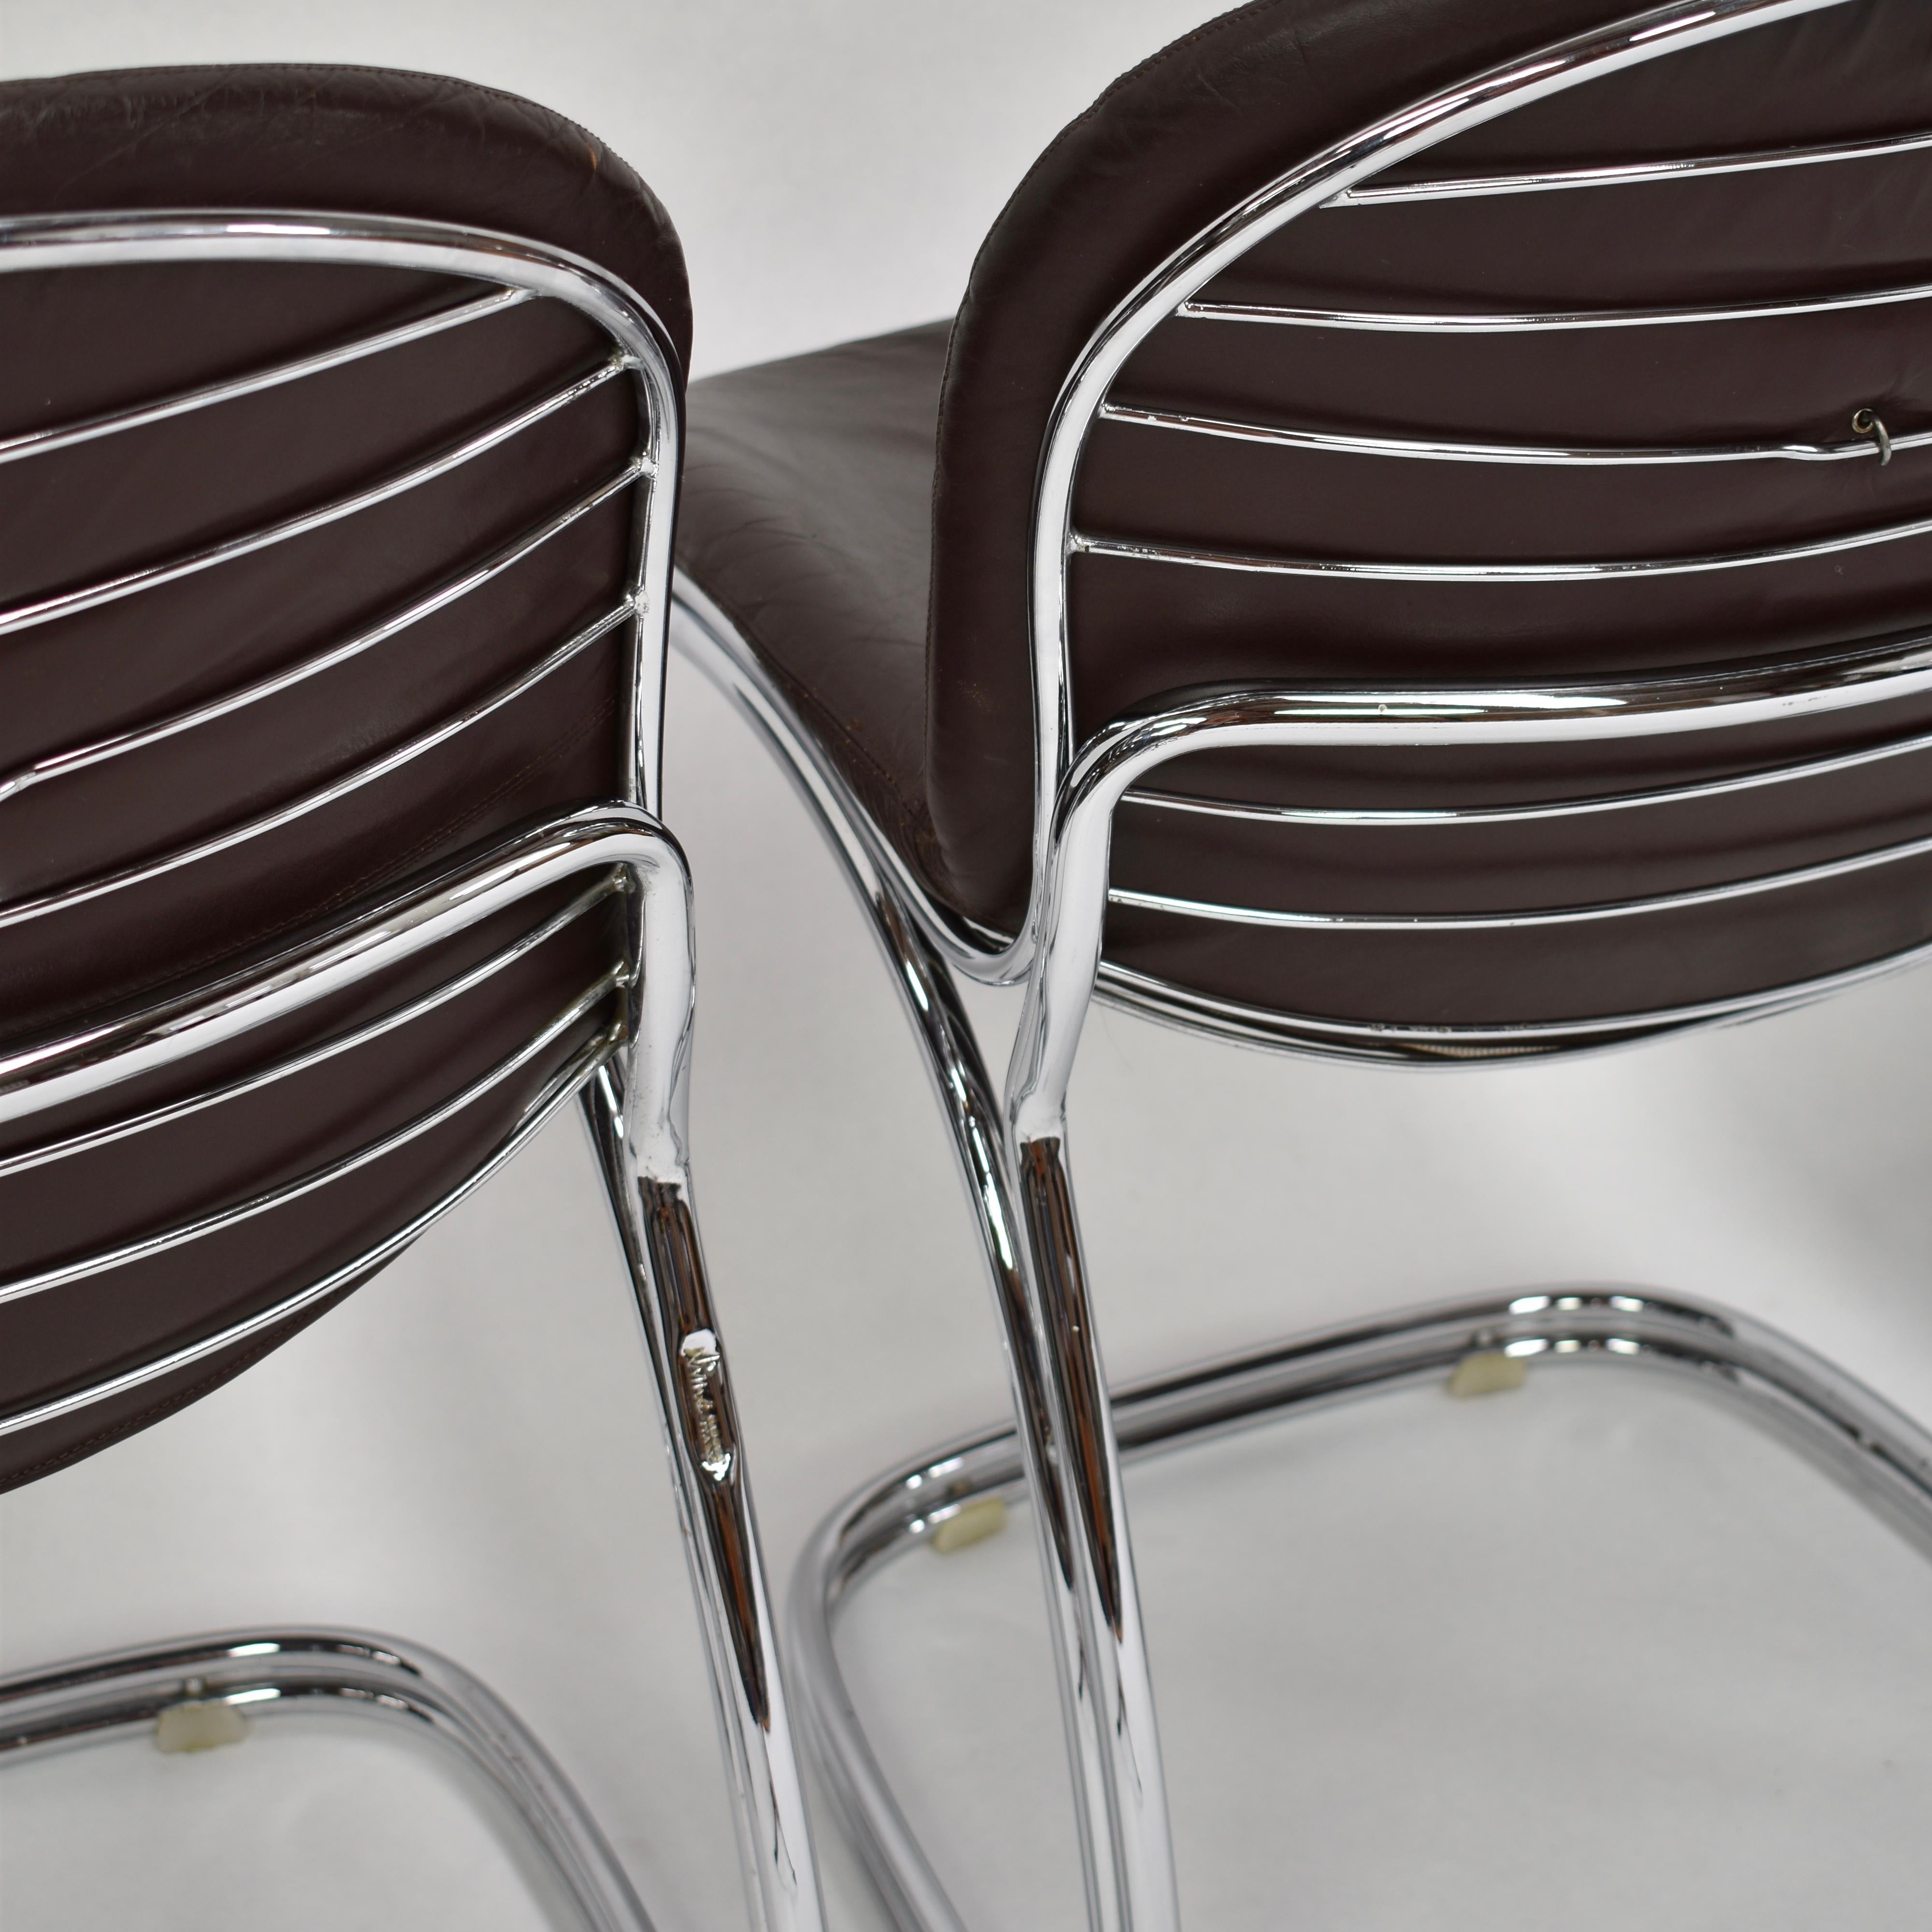 Gastone Rinaldi 'Sabrina' Chocolate Brown Leather Chairs for RIMA, Italy 2